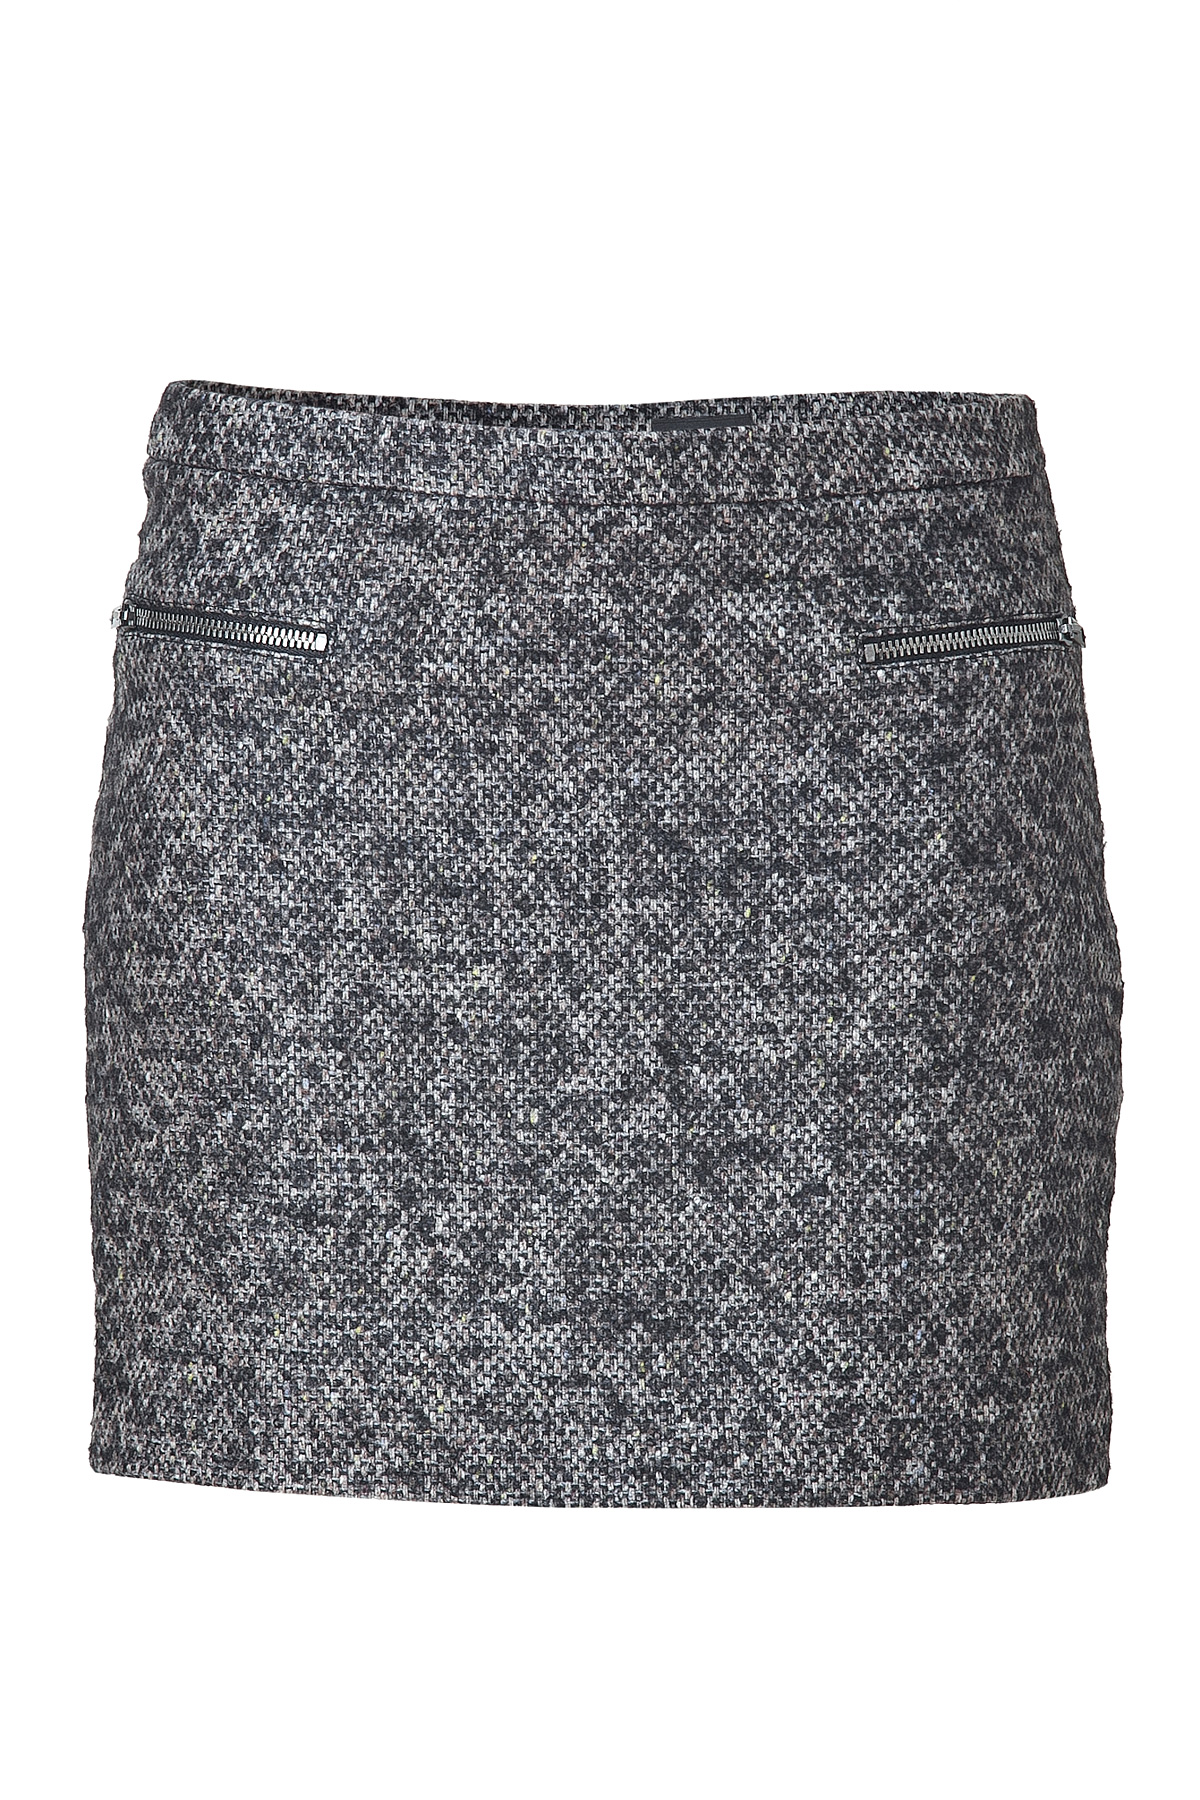 Lyst - Joseph Charcoal Jumbo Tweed Skirt in Gray